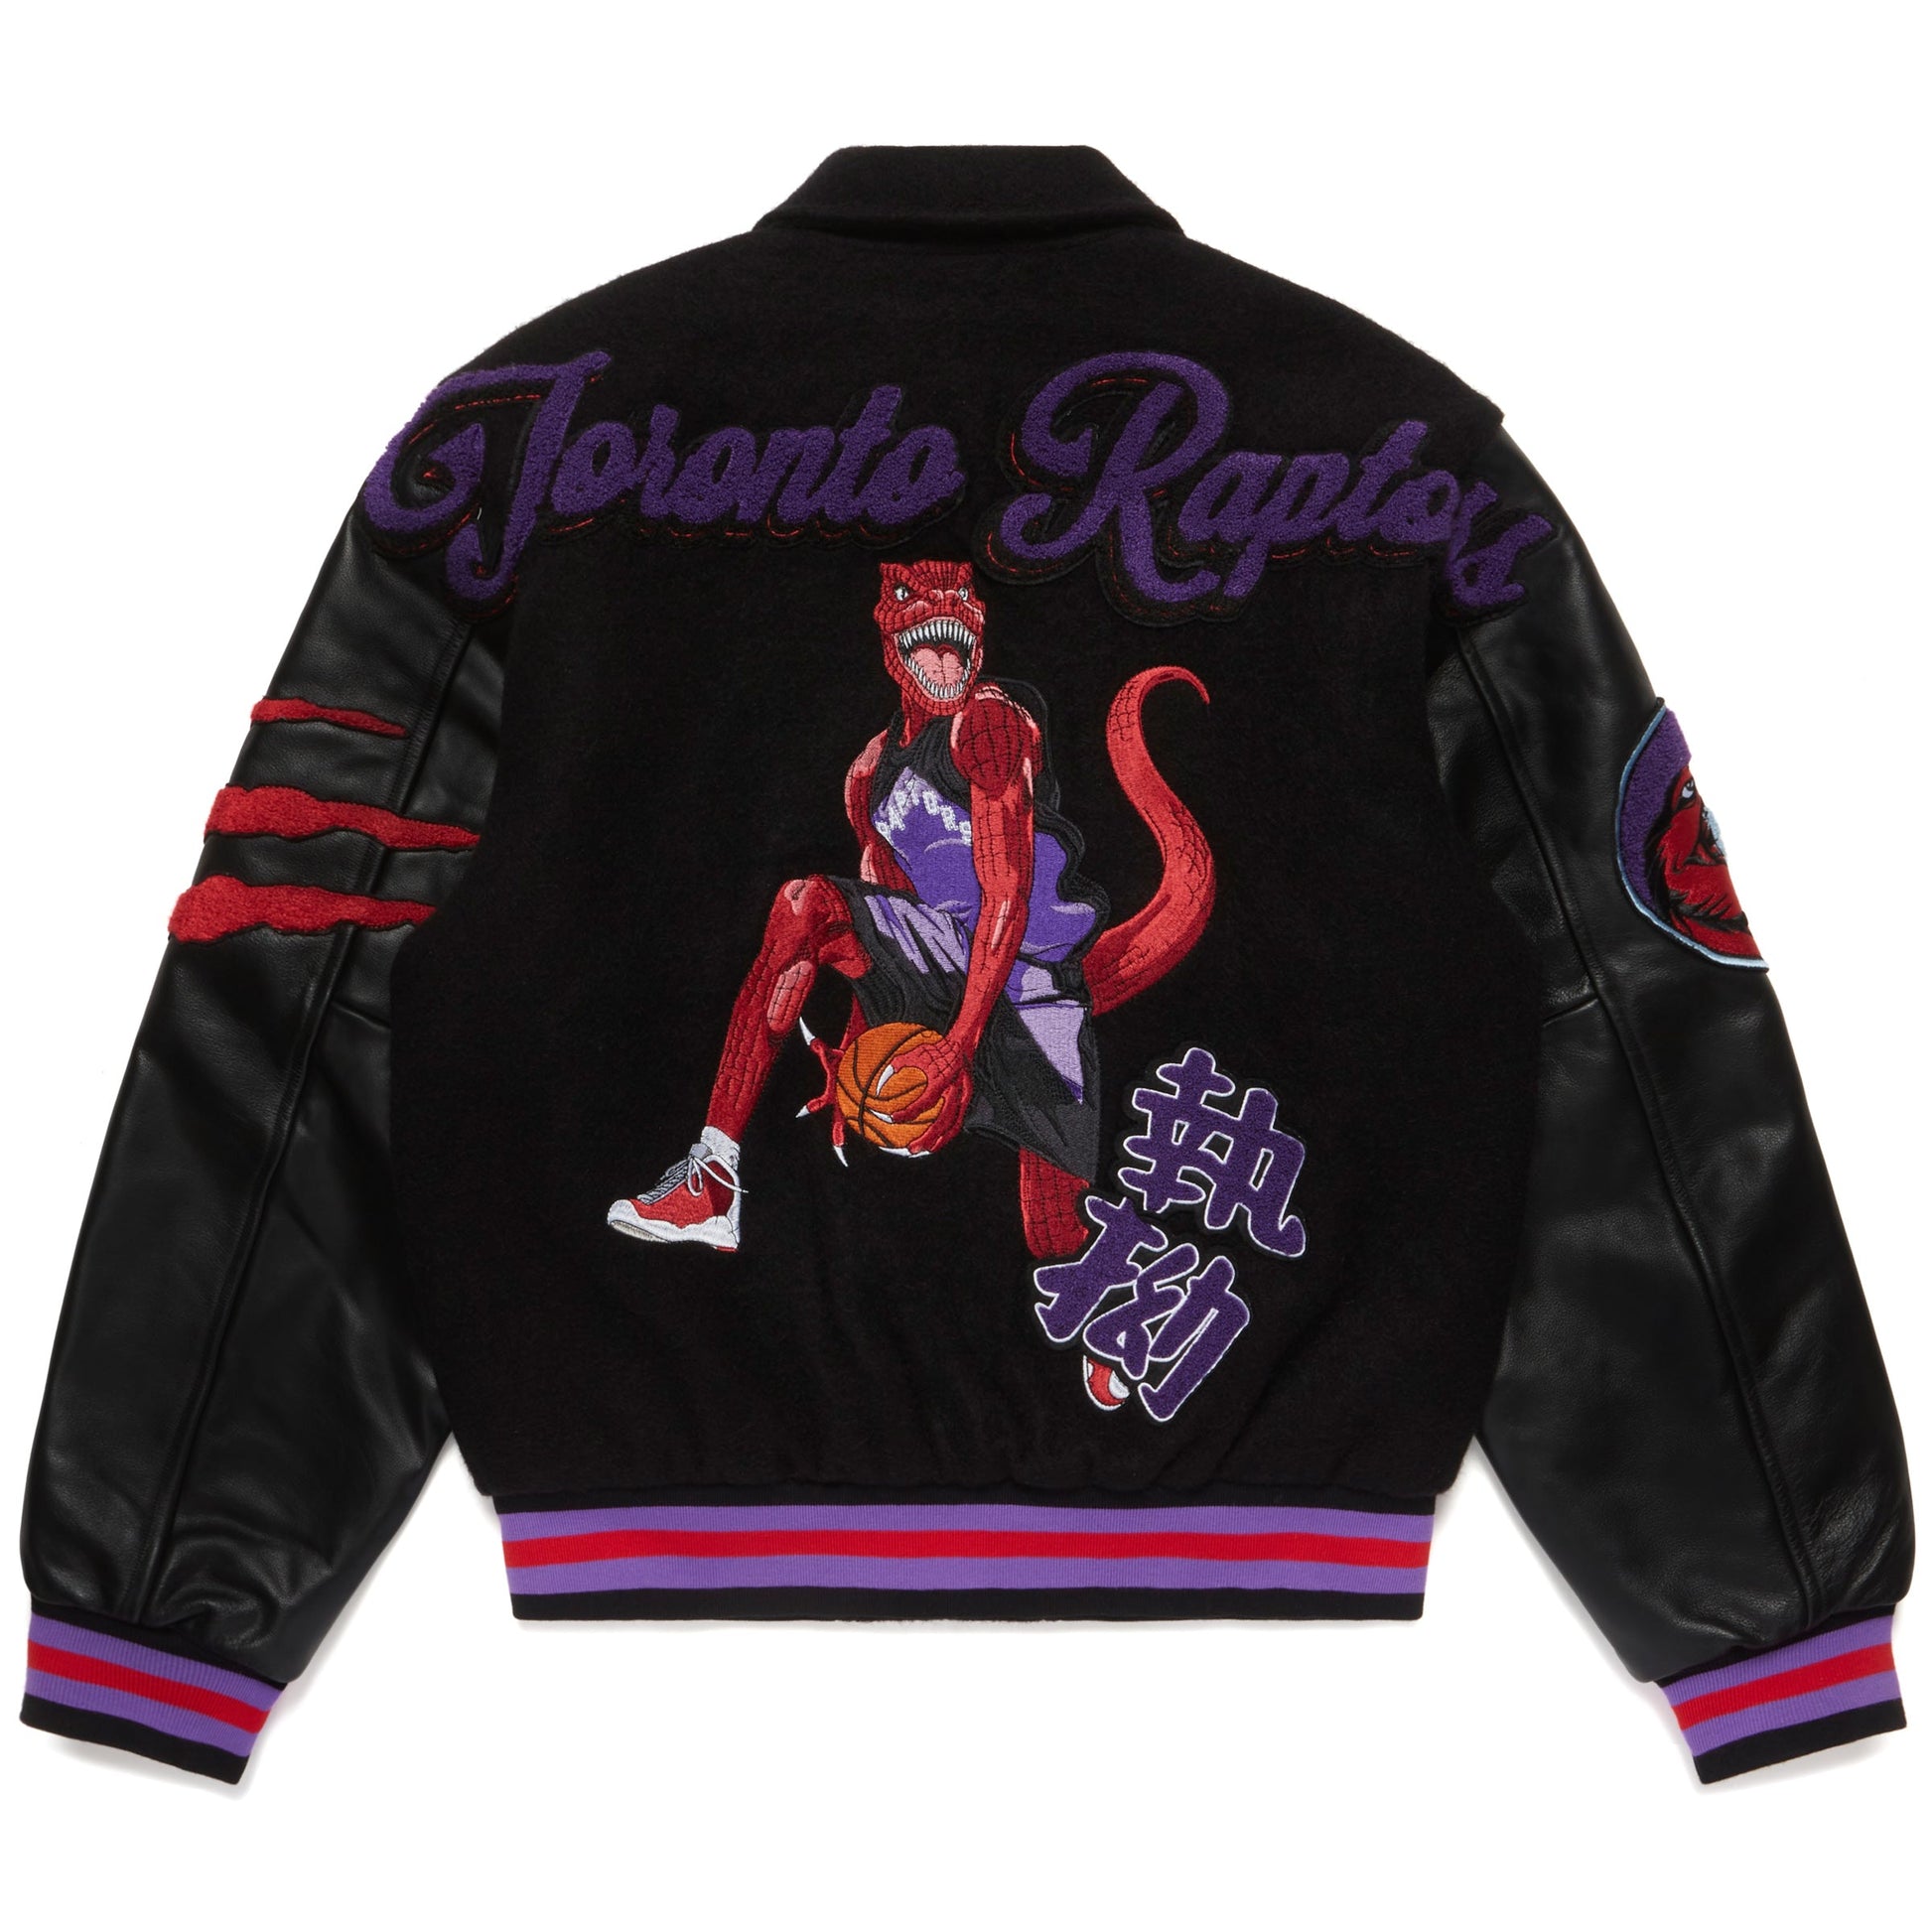 Mitchell & Ness sweatshirt Toronto Raptors NBA Team Logo Hoody black